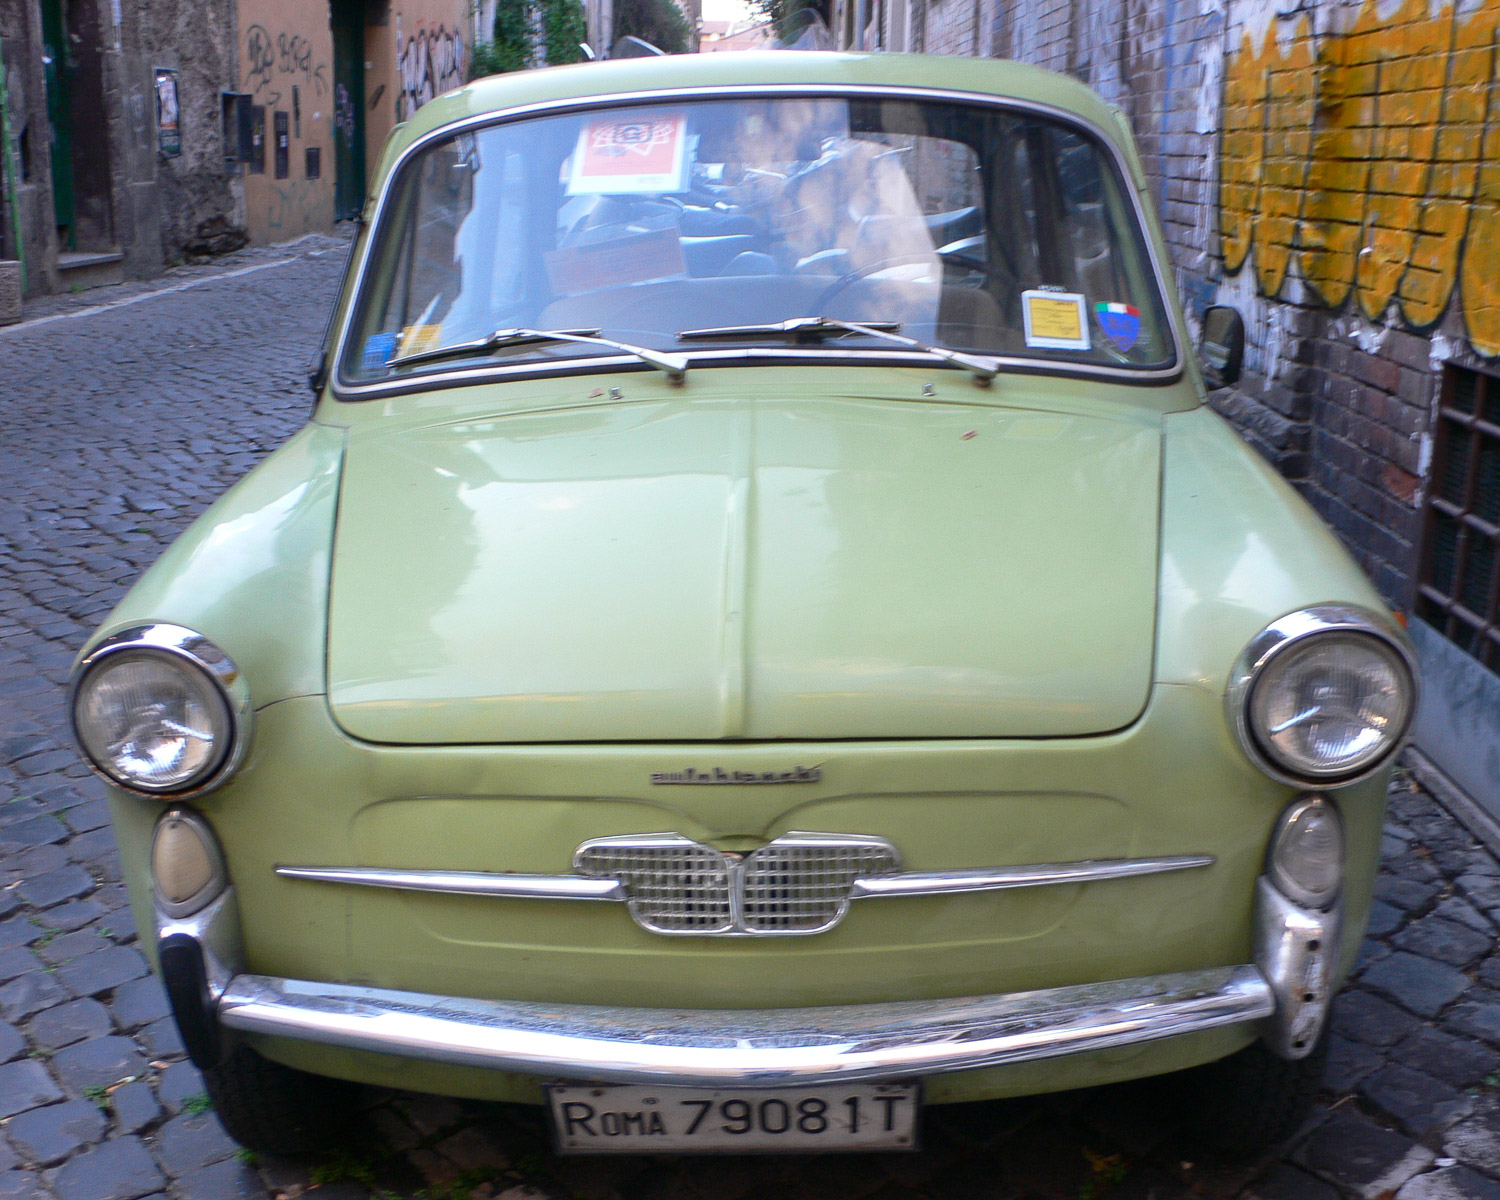 Small cars in Rome Photo Heatheronhertravels.com